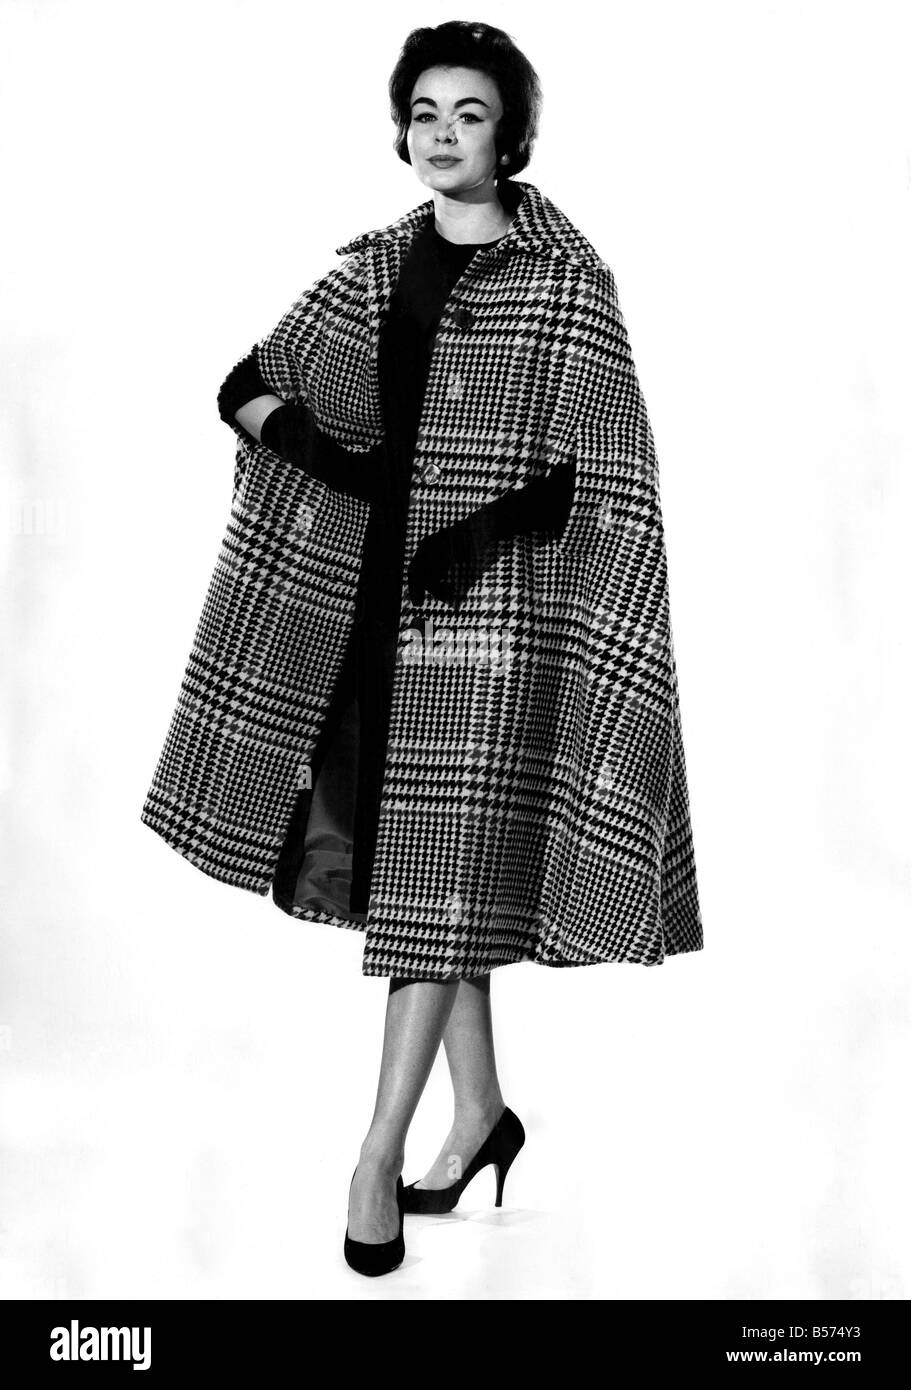 Tagwache Moden: Jacky Jackson gesehen hier Modellierung Tweed Cape Mantel.  Dezember 1960 P008984 Stockfotografie - Alamy